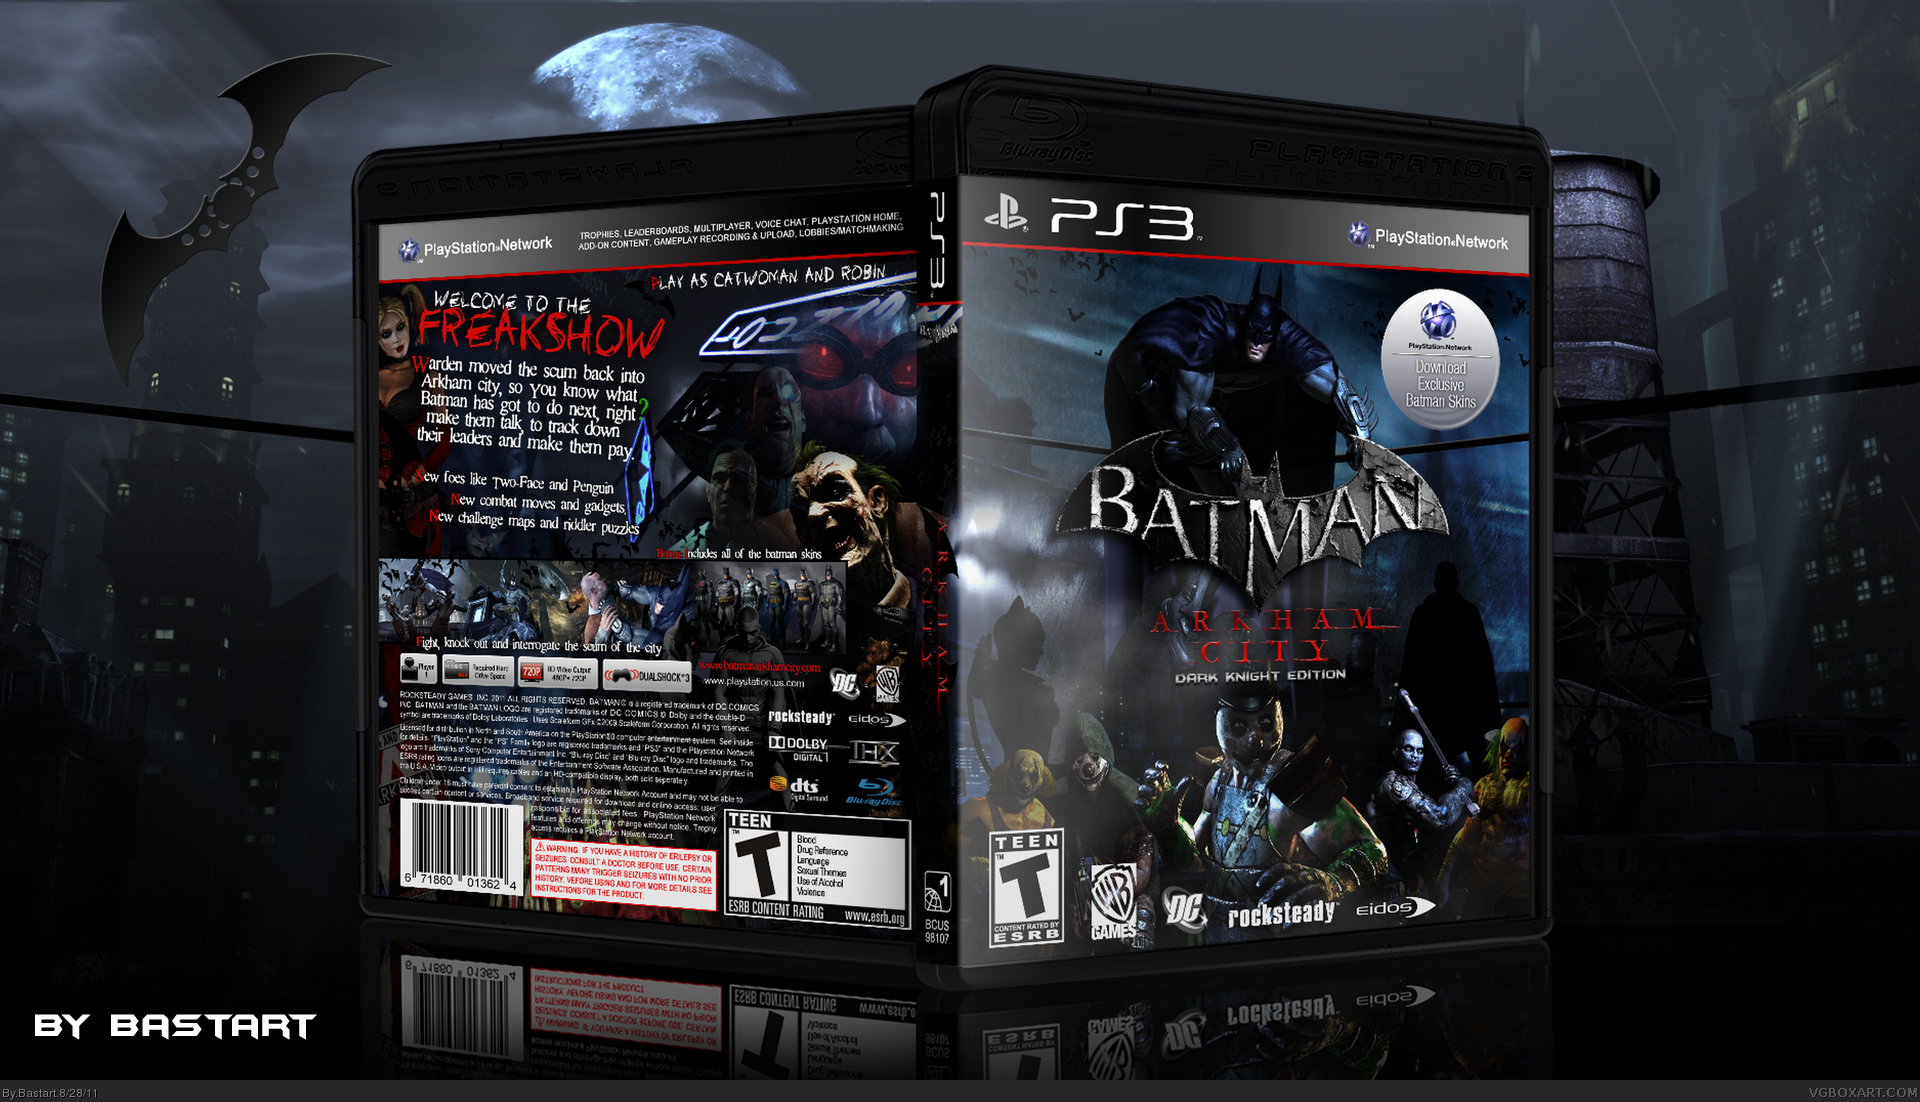 Batman Arkham City: Dark Knight Edition box cover